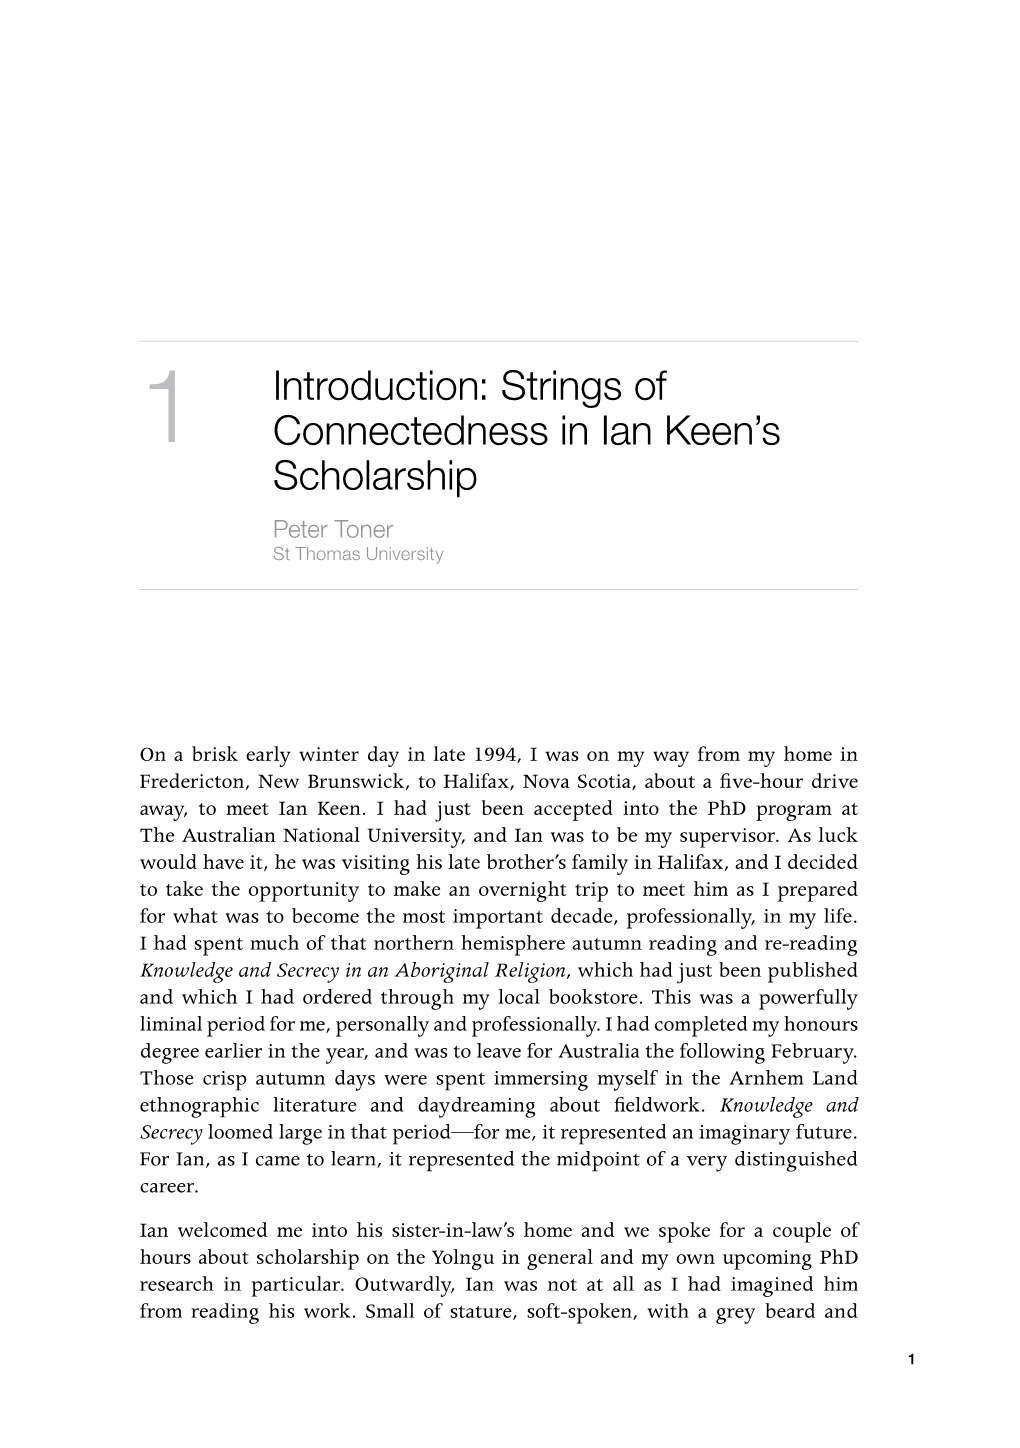 Strings of Connectedness in Ian Keen's Scholarship